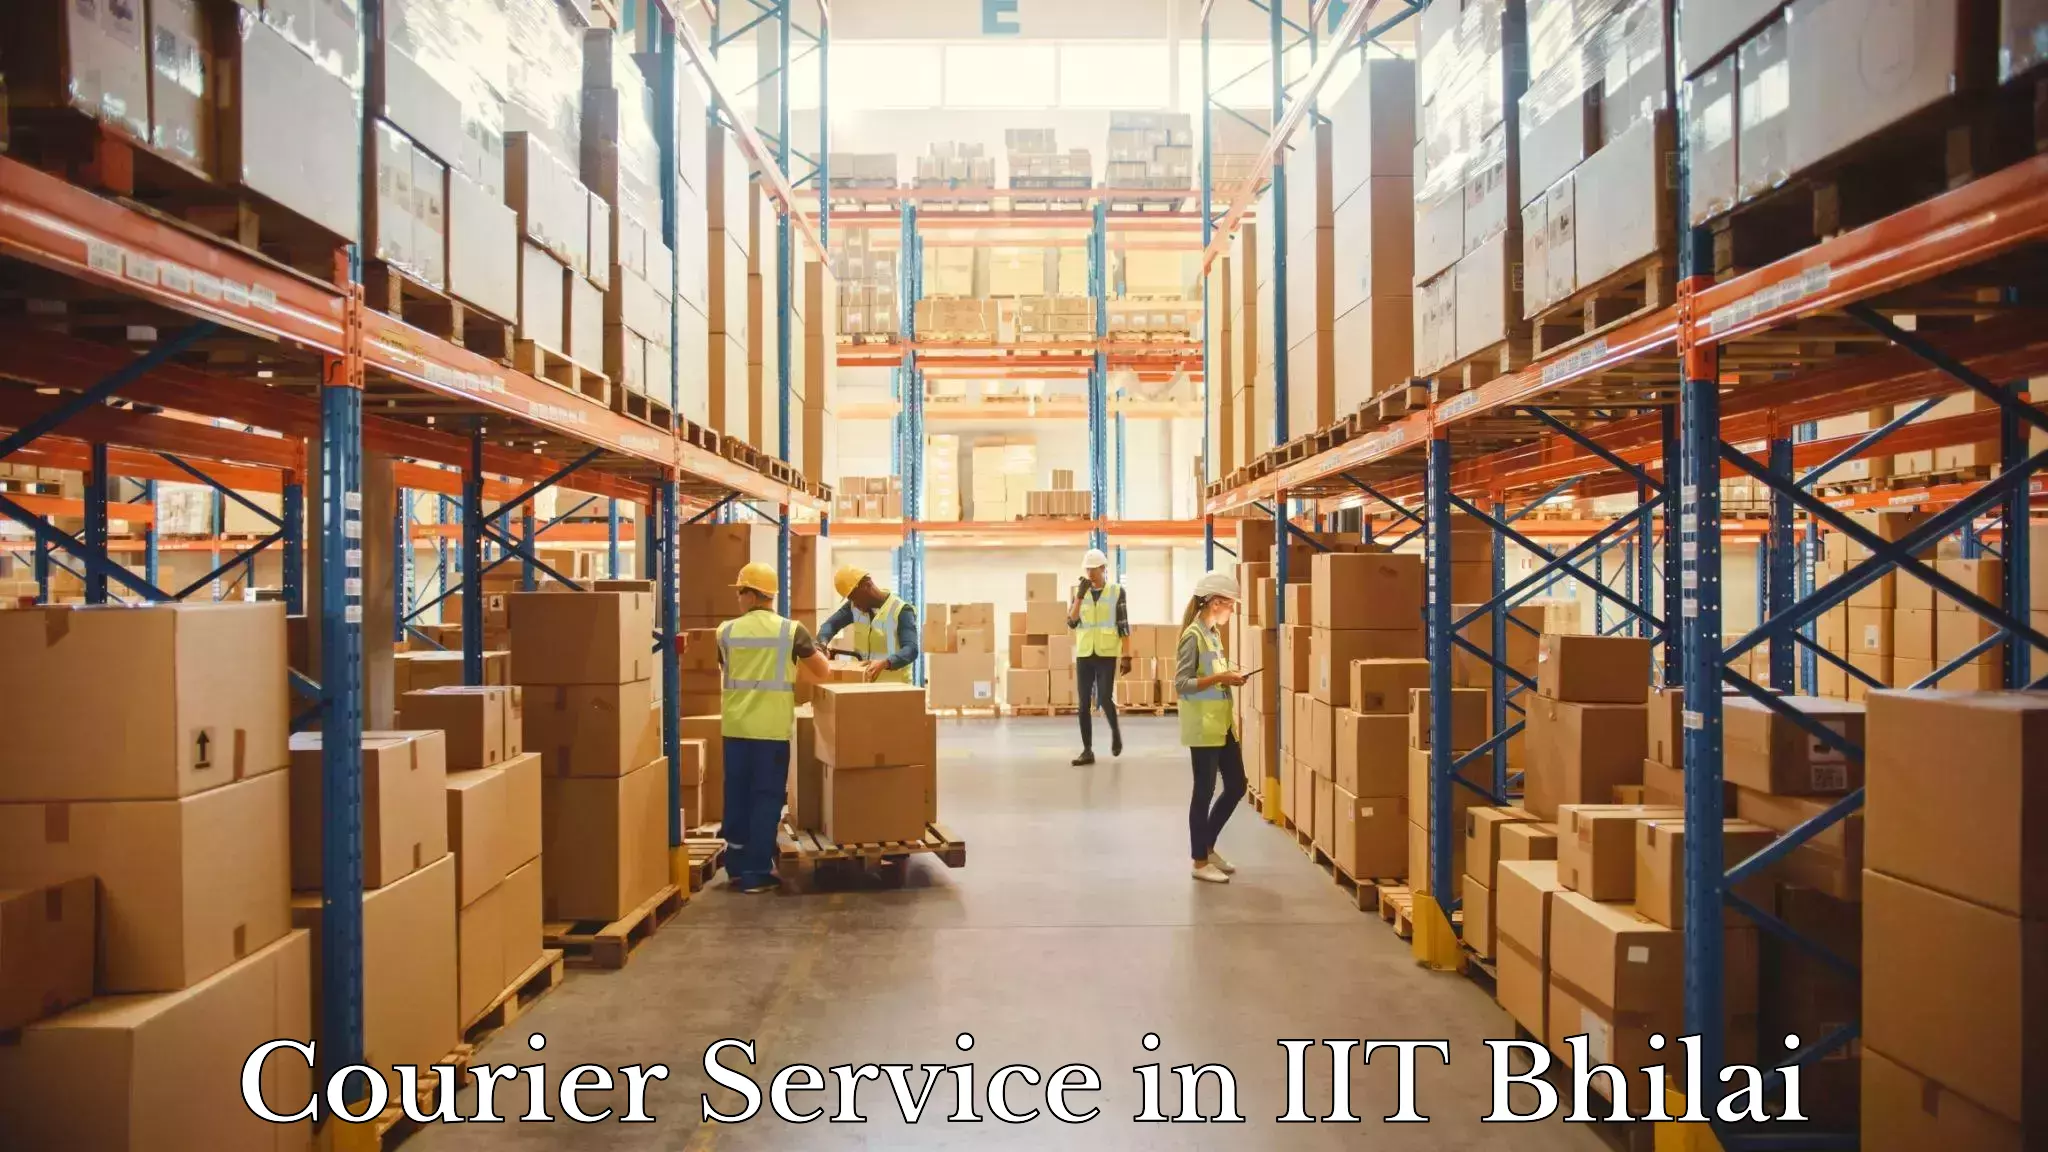 Professional parcel services in IIT Bhilai